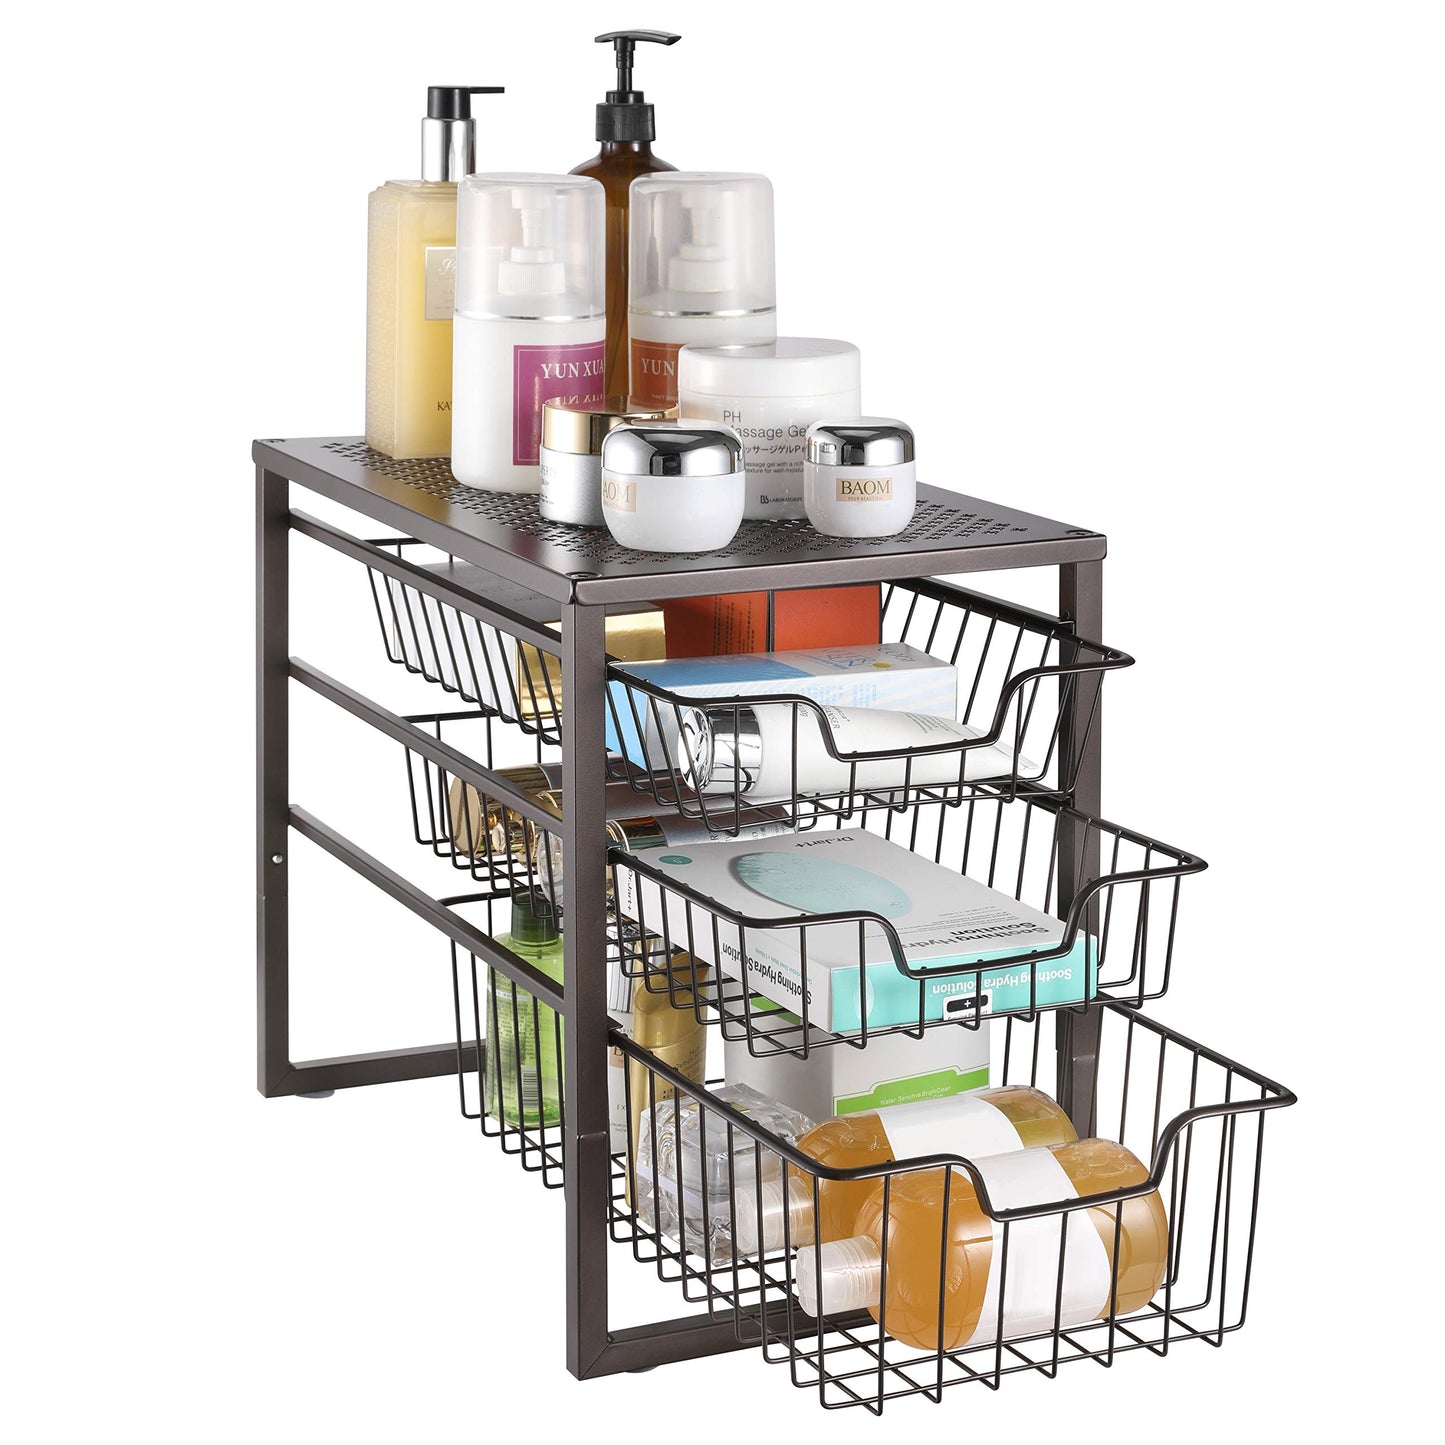 NETEL Under Sink Kitchen Rack Expandable Cabinet Shelf Organizer